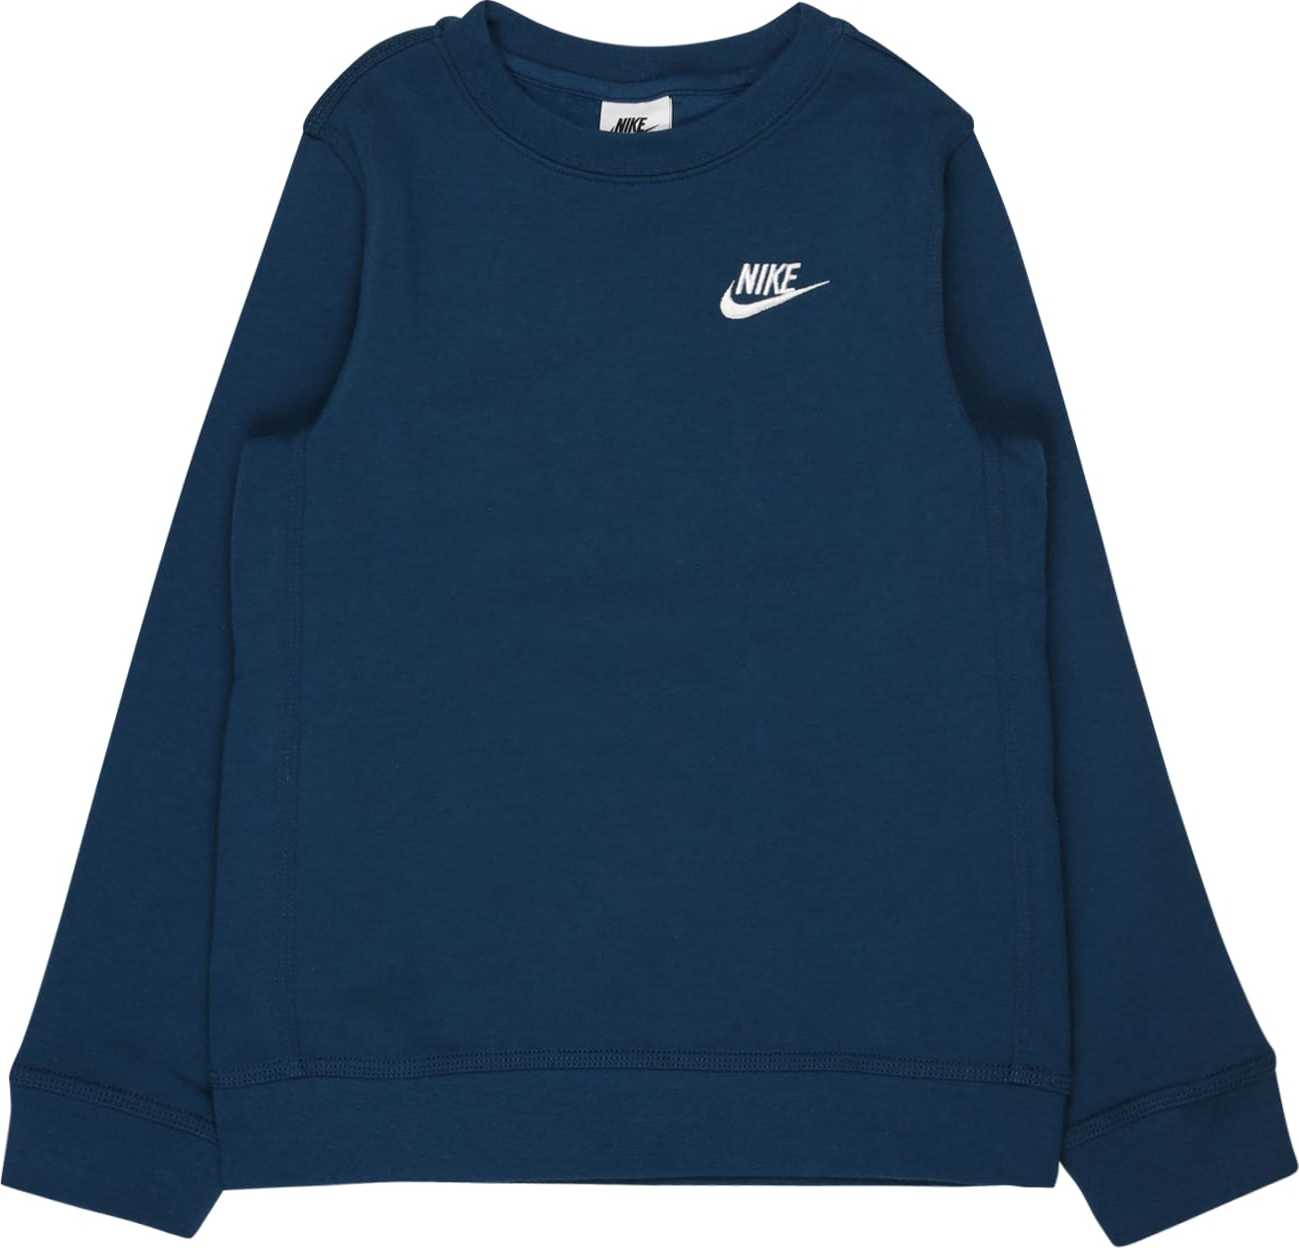 Nike Sportswear Mikina modrá / bílá